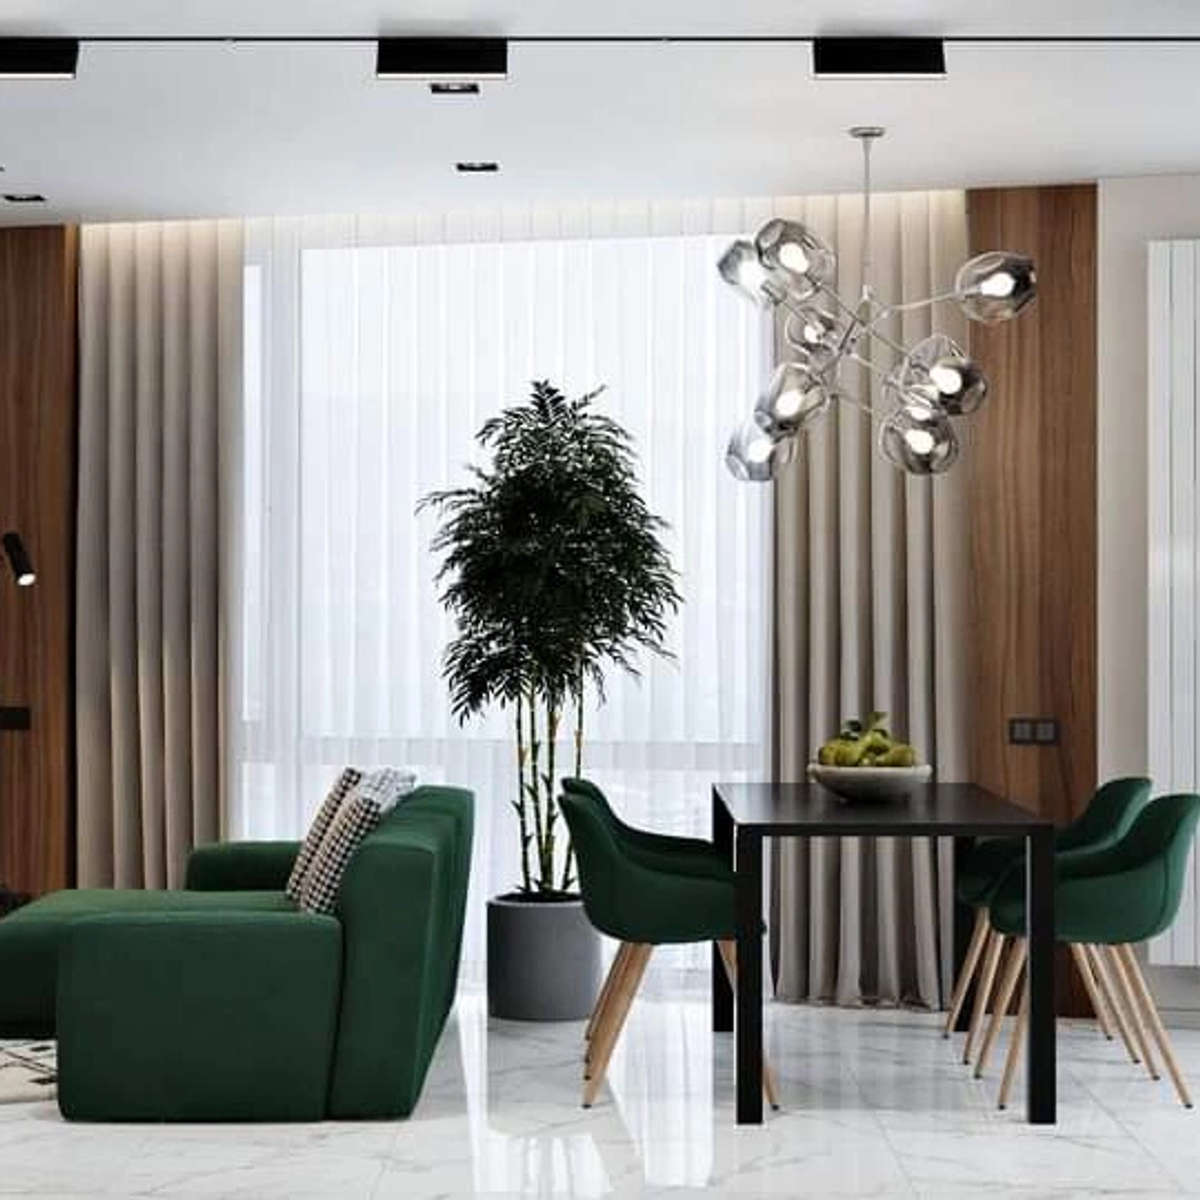 Furniture, Dining, Table Designs by Architect nasdaa interior pvt Ltd, Delhi | Kolo